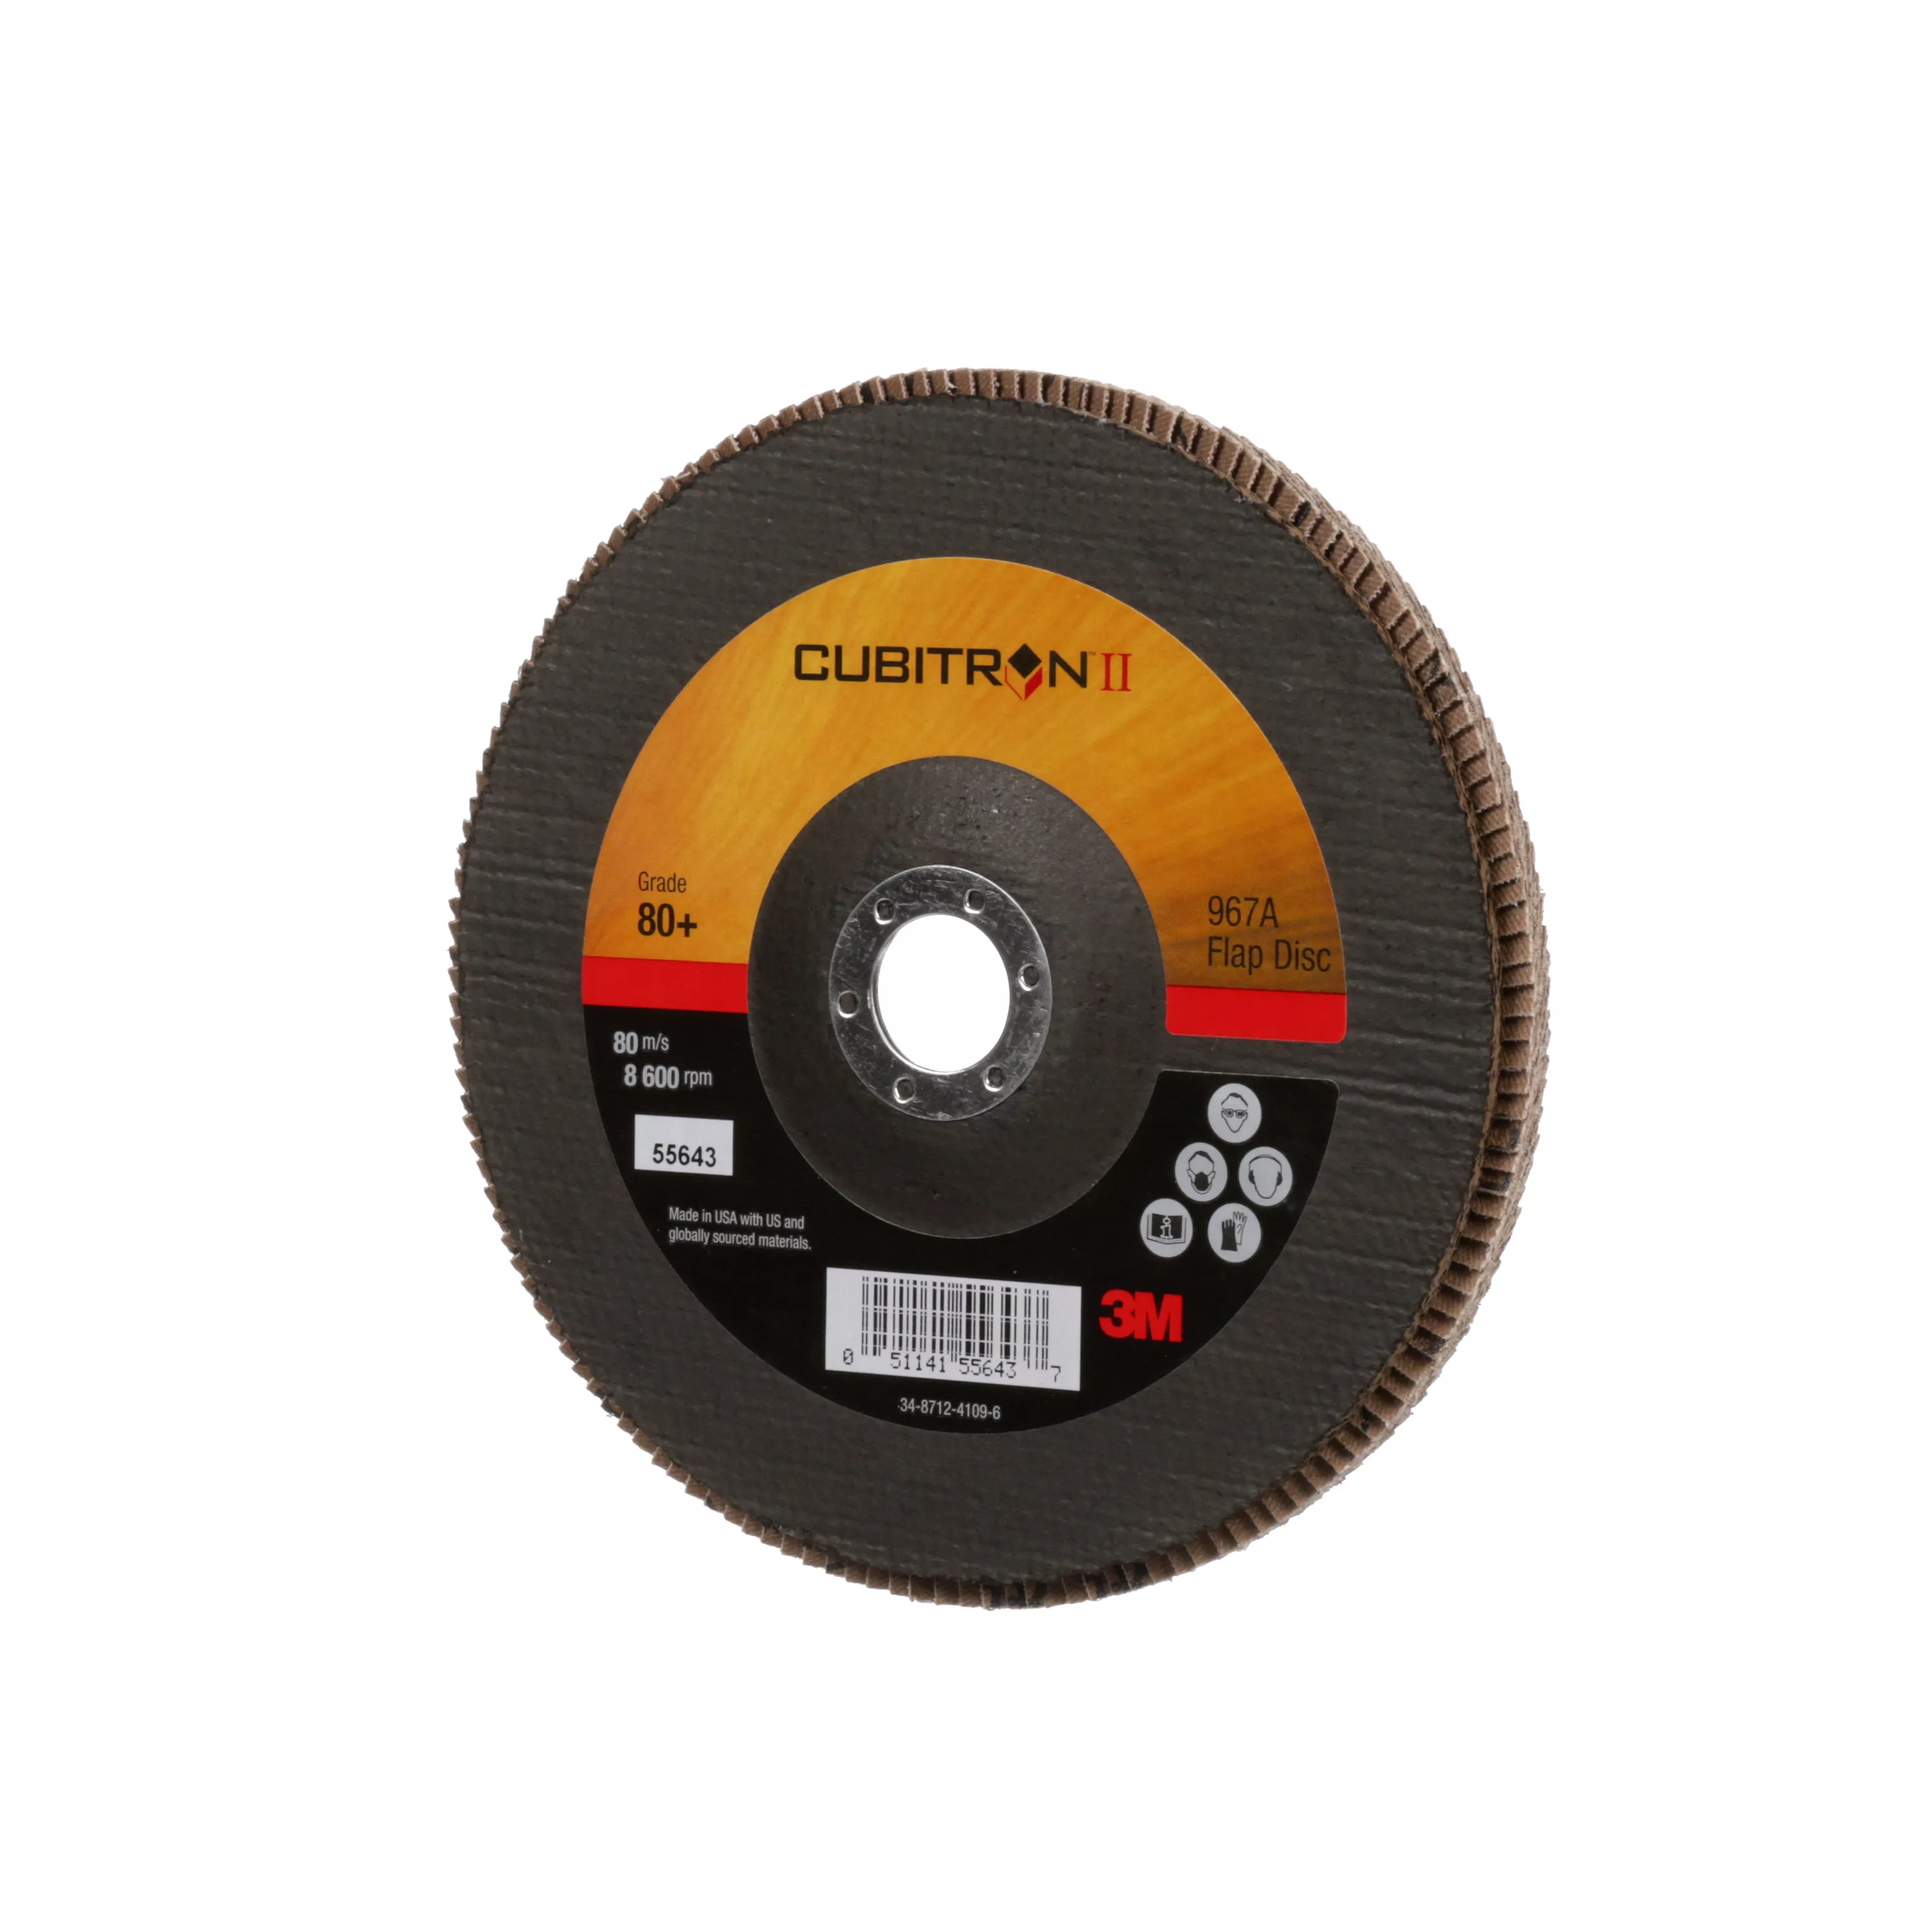 SKU 7010327064 | 3M™ Cubitron™ II Flap Disc 967A